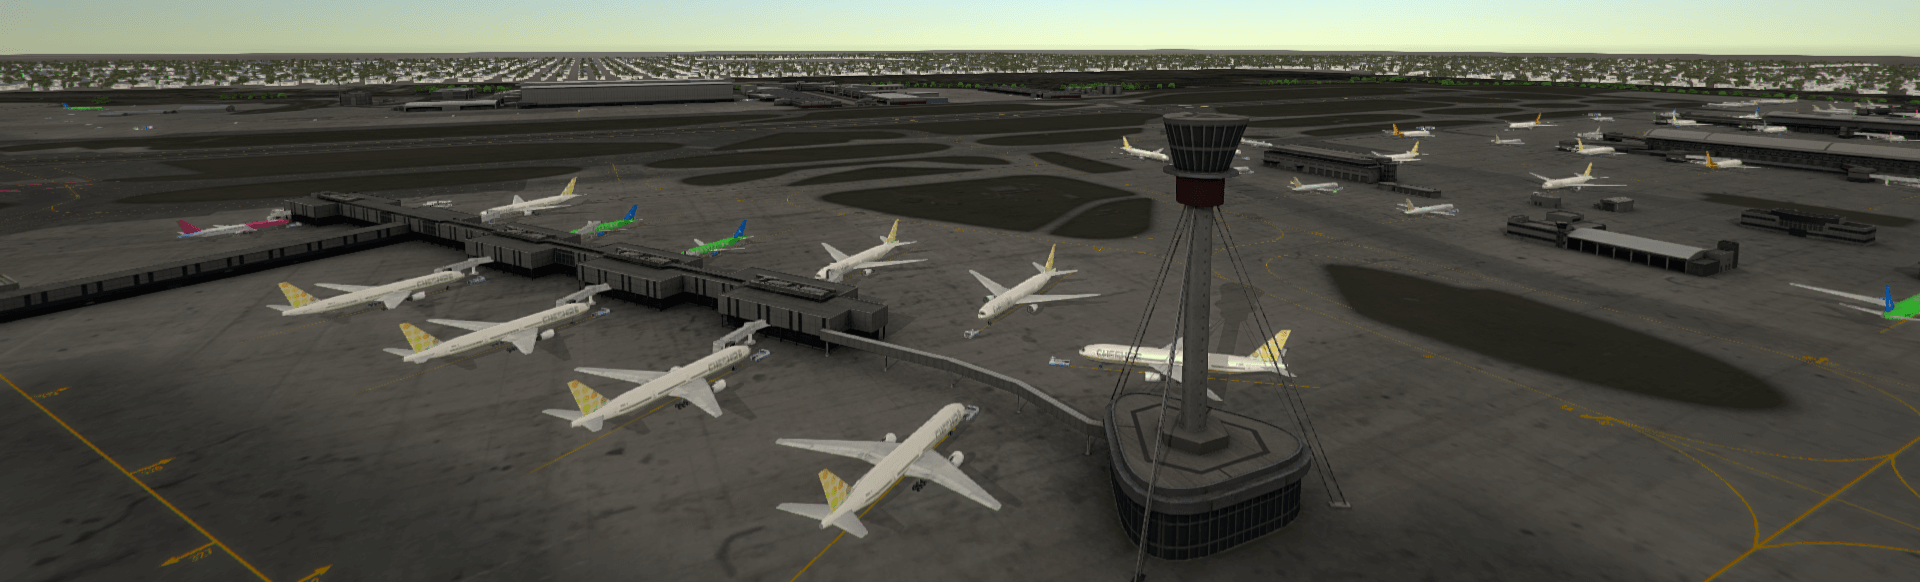 EGLL Airport Tower3D